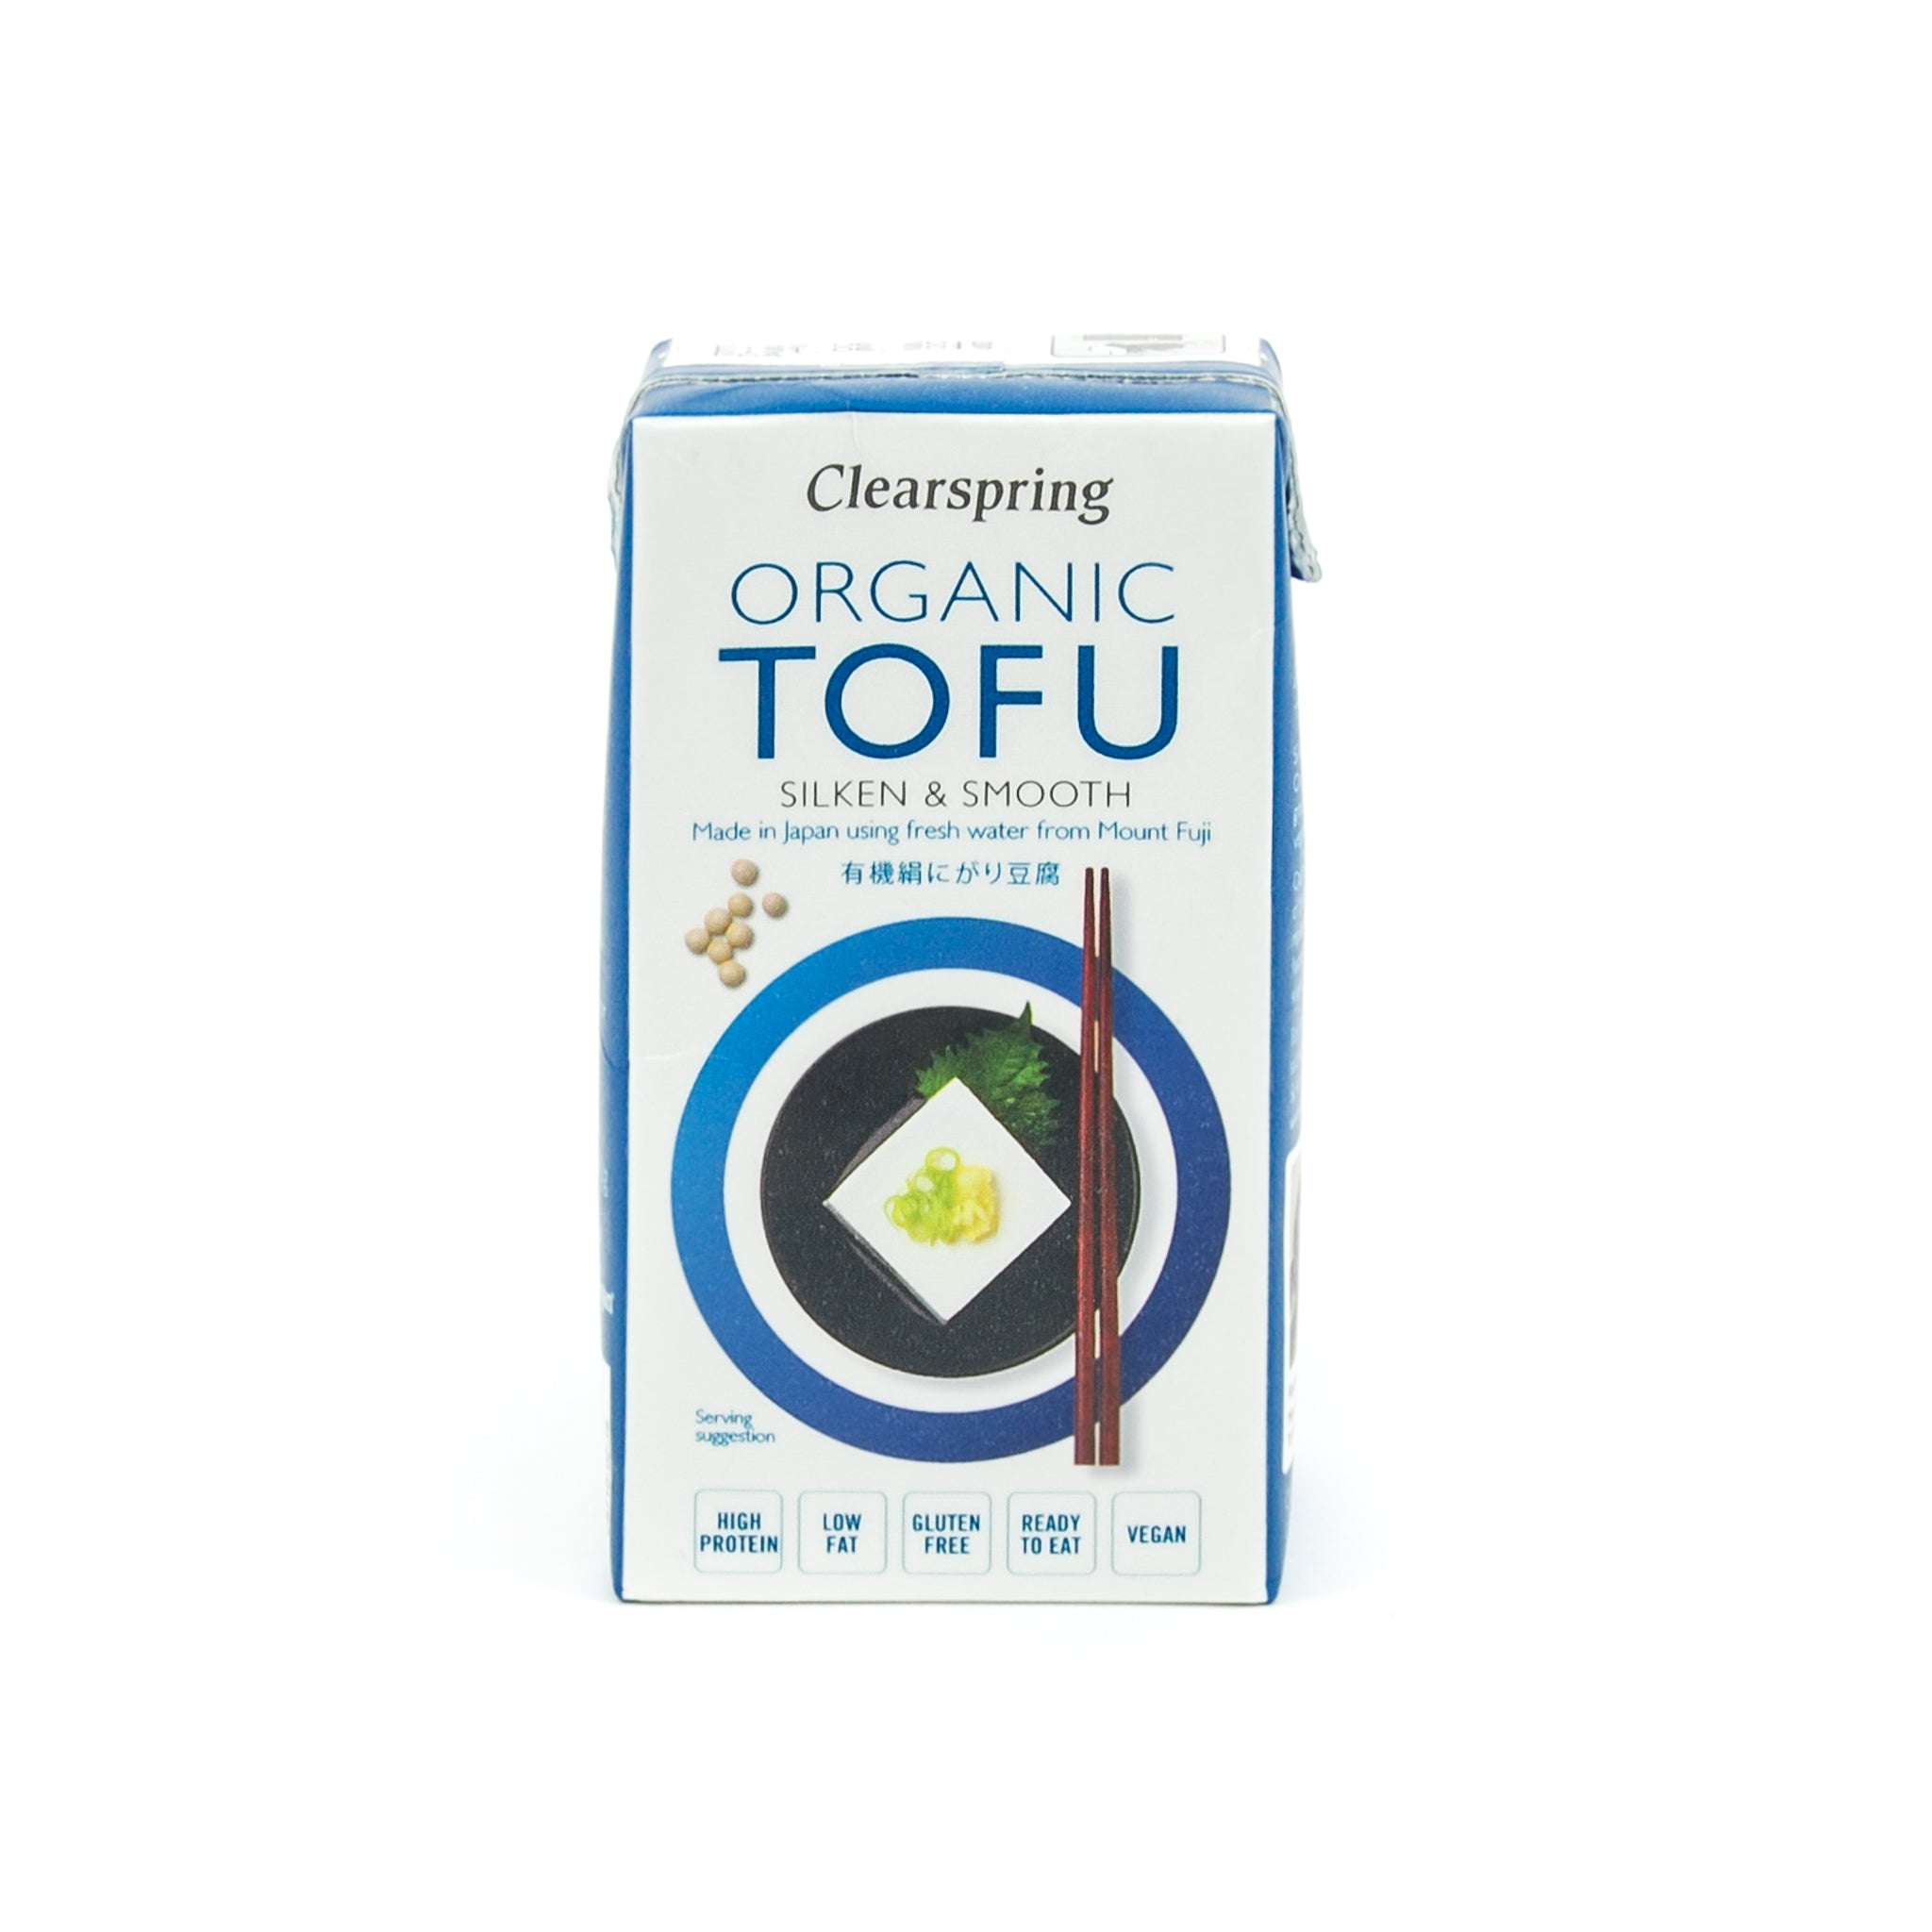 Clearspring Organic Tofu 300g Ingredients Tofu & Beans & Pulses Japanese Food